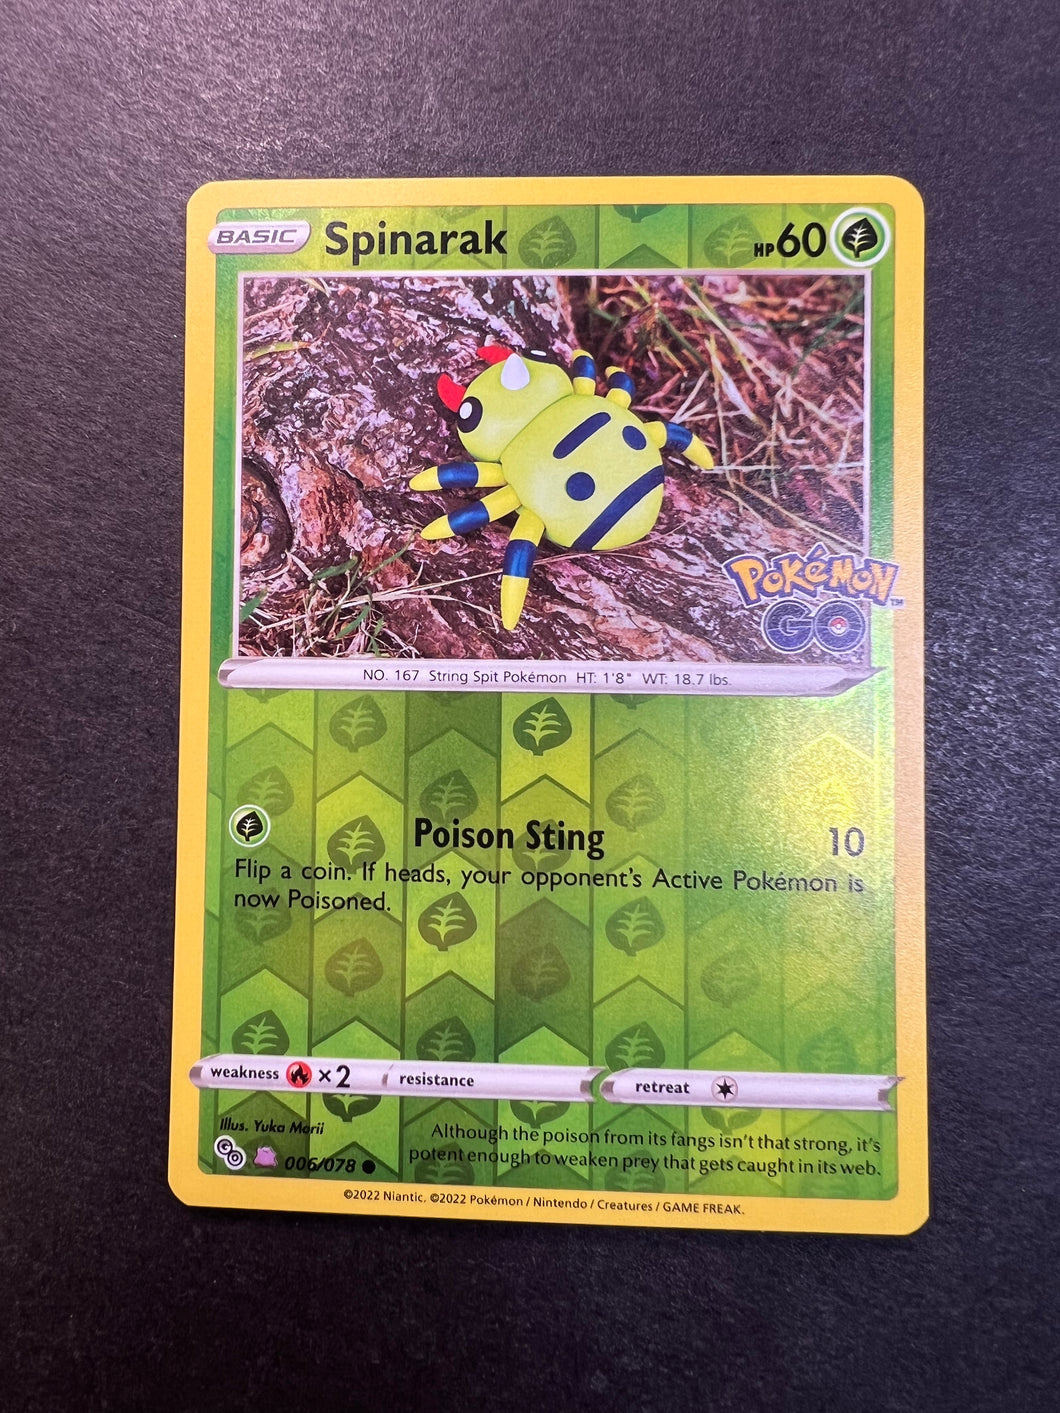 Pokémon Go TCG, Ditto sticker reveal